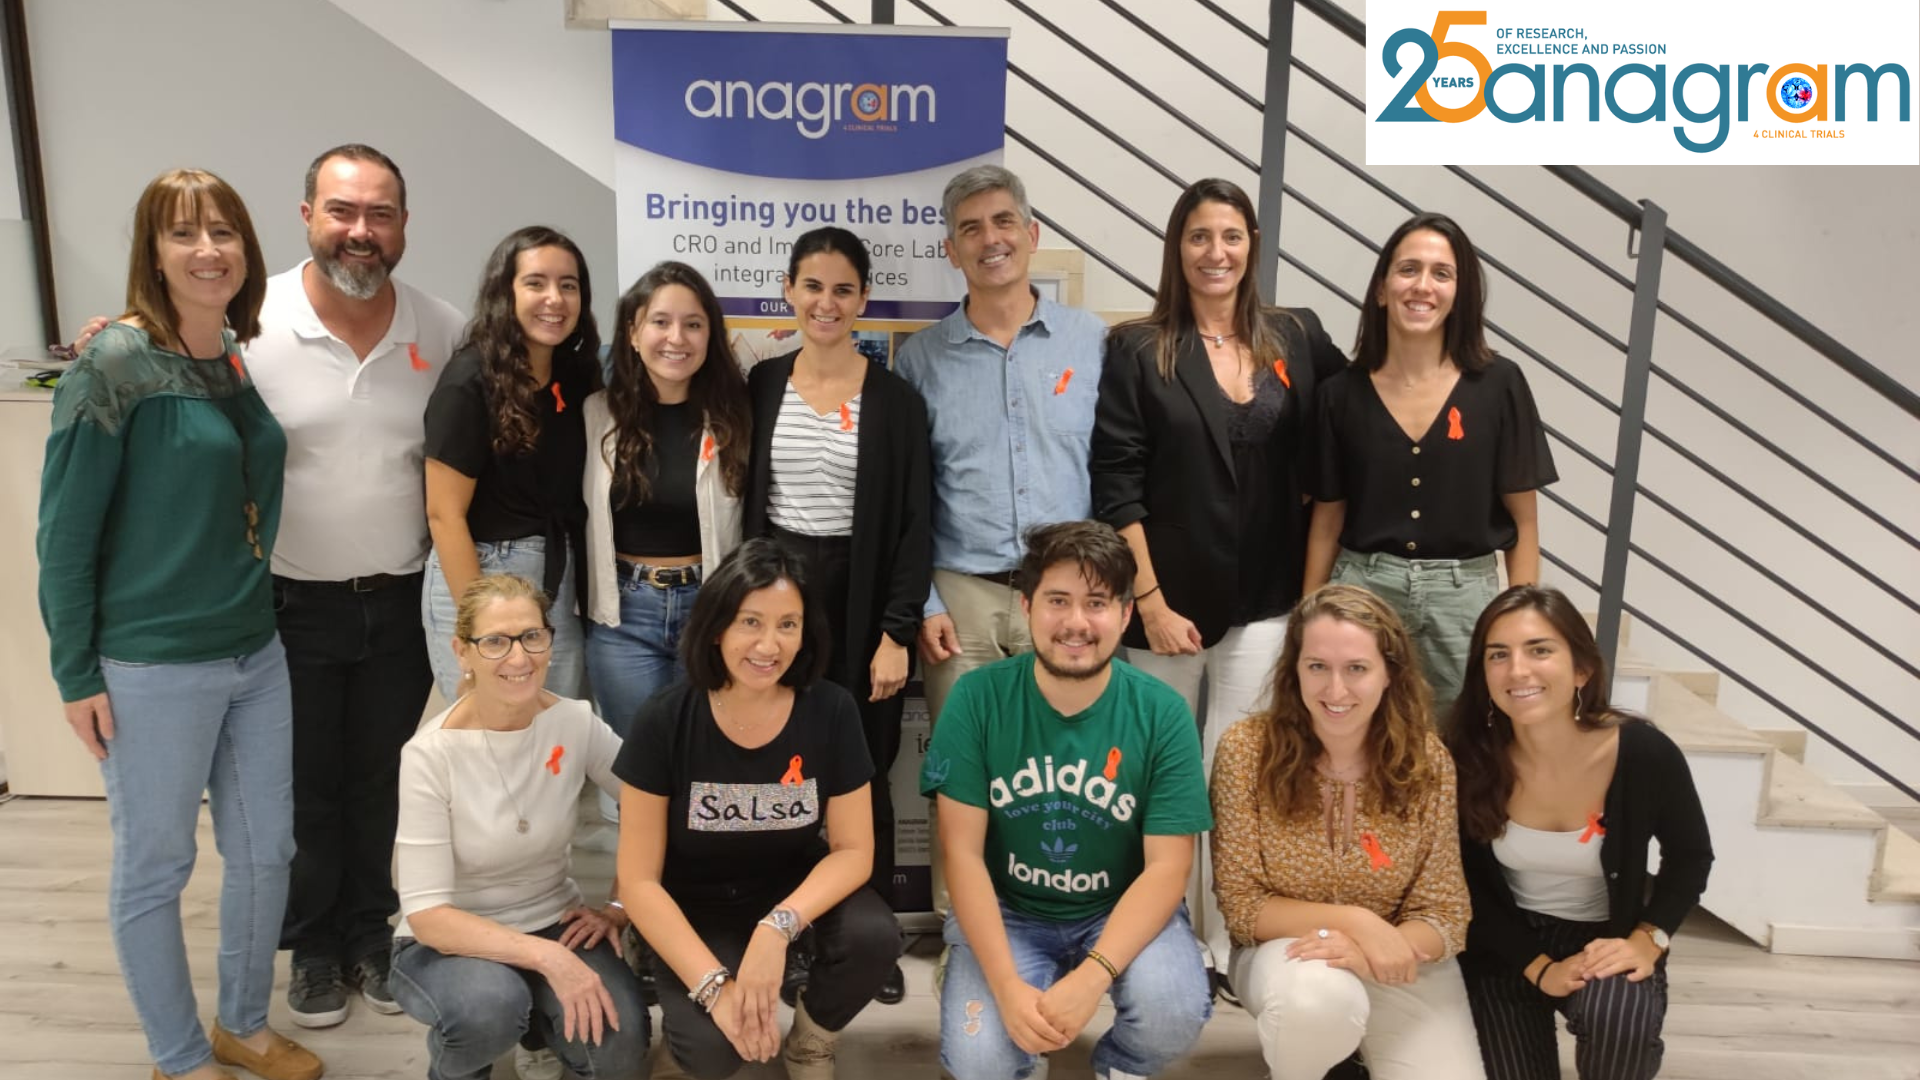 Anagram celebrates its 25th Anniversary! 